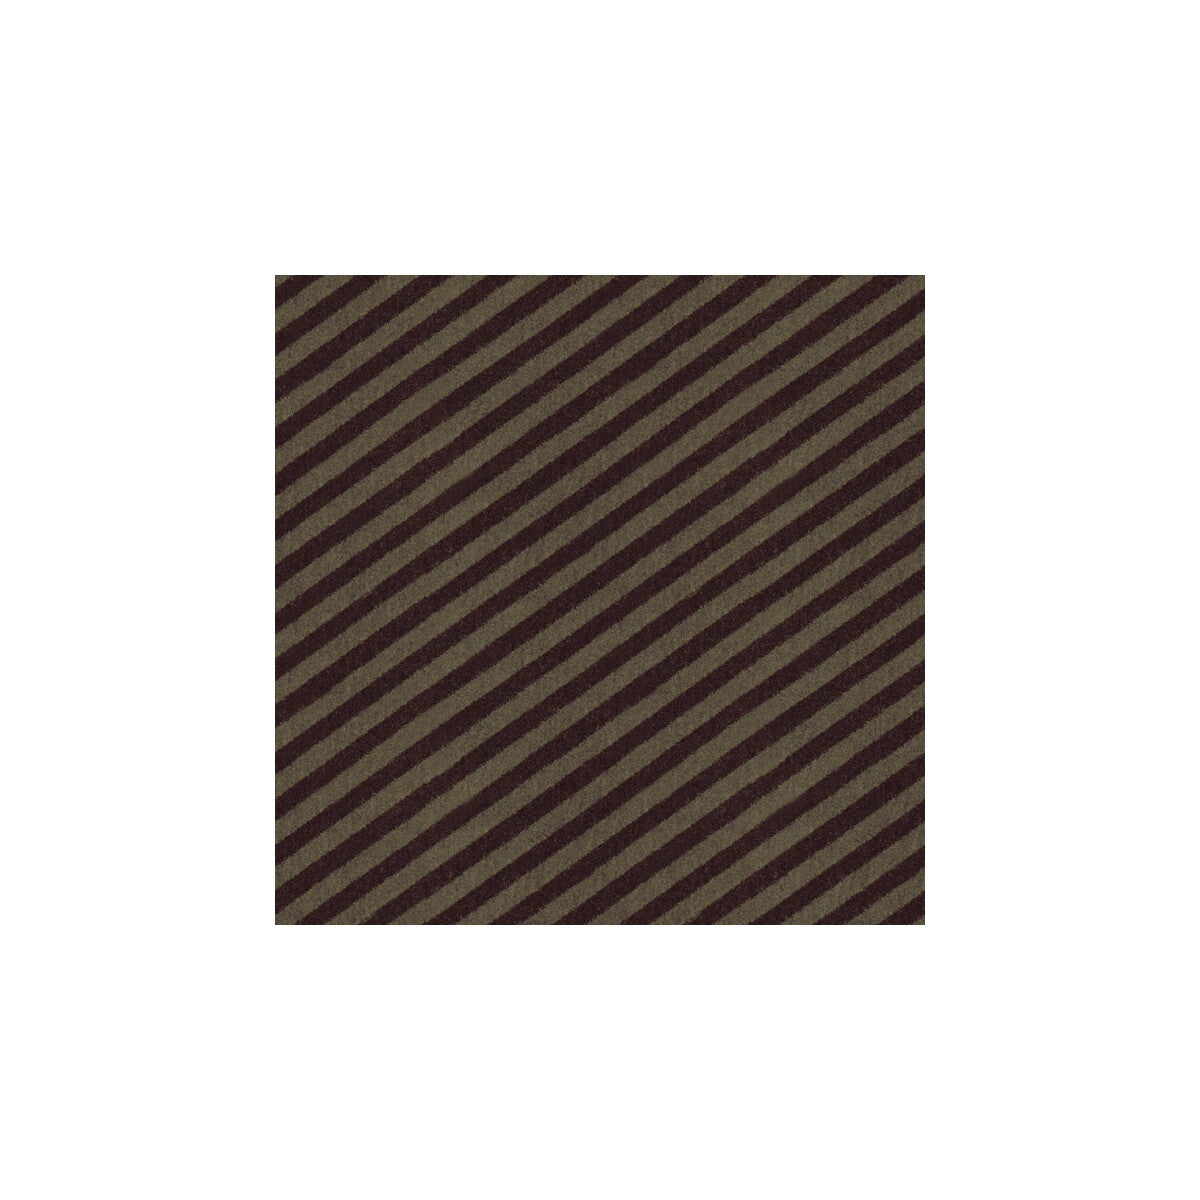 Oblique fabric in truffle/grey color - pattern GWF-3050.611.0 - by Lee Jofa Modern in the Kelly Wearstler II collection